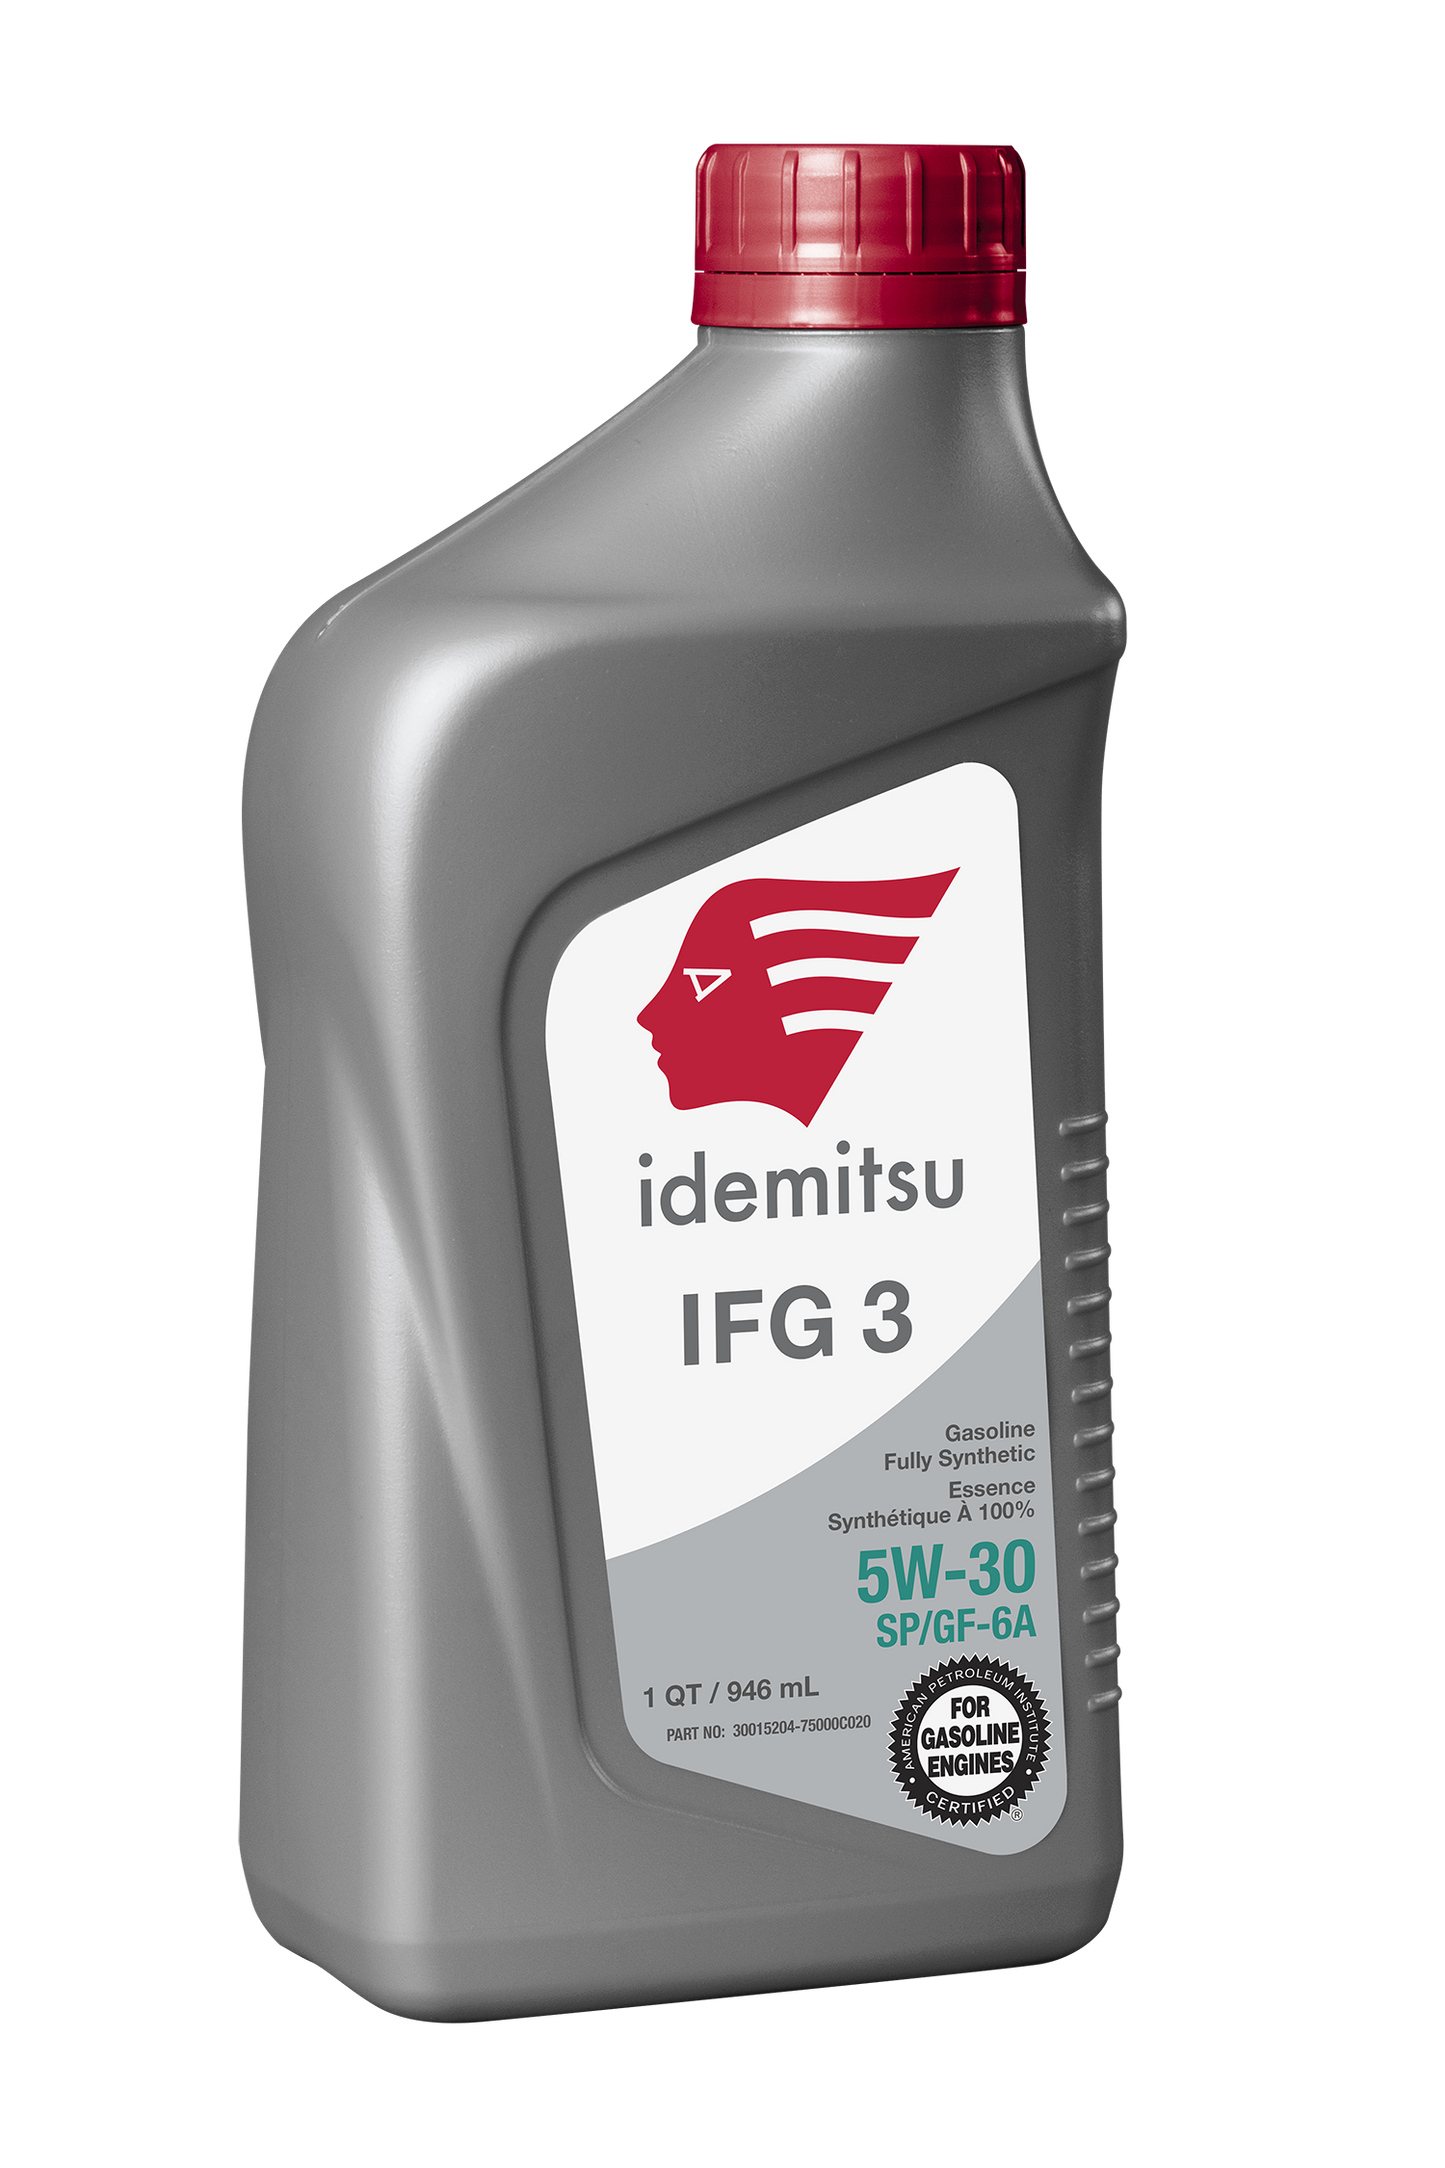 IDEMITSU IFG3 5W-30 SP/GF-6A Motor Oil - 1 qt, Case of 12 (30015204-75000C020)